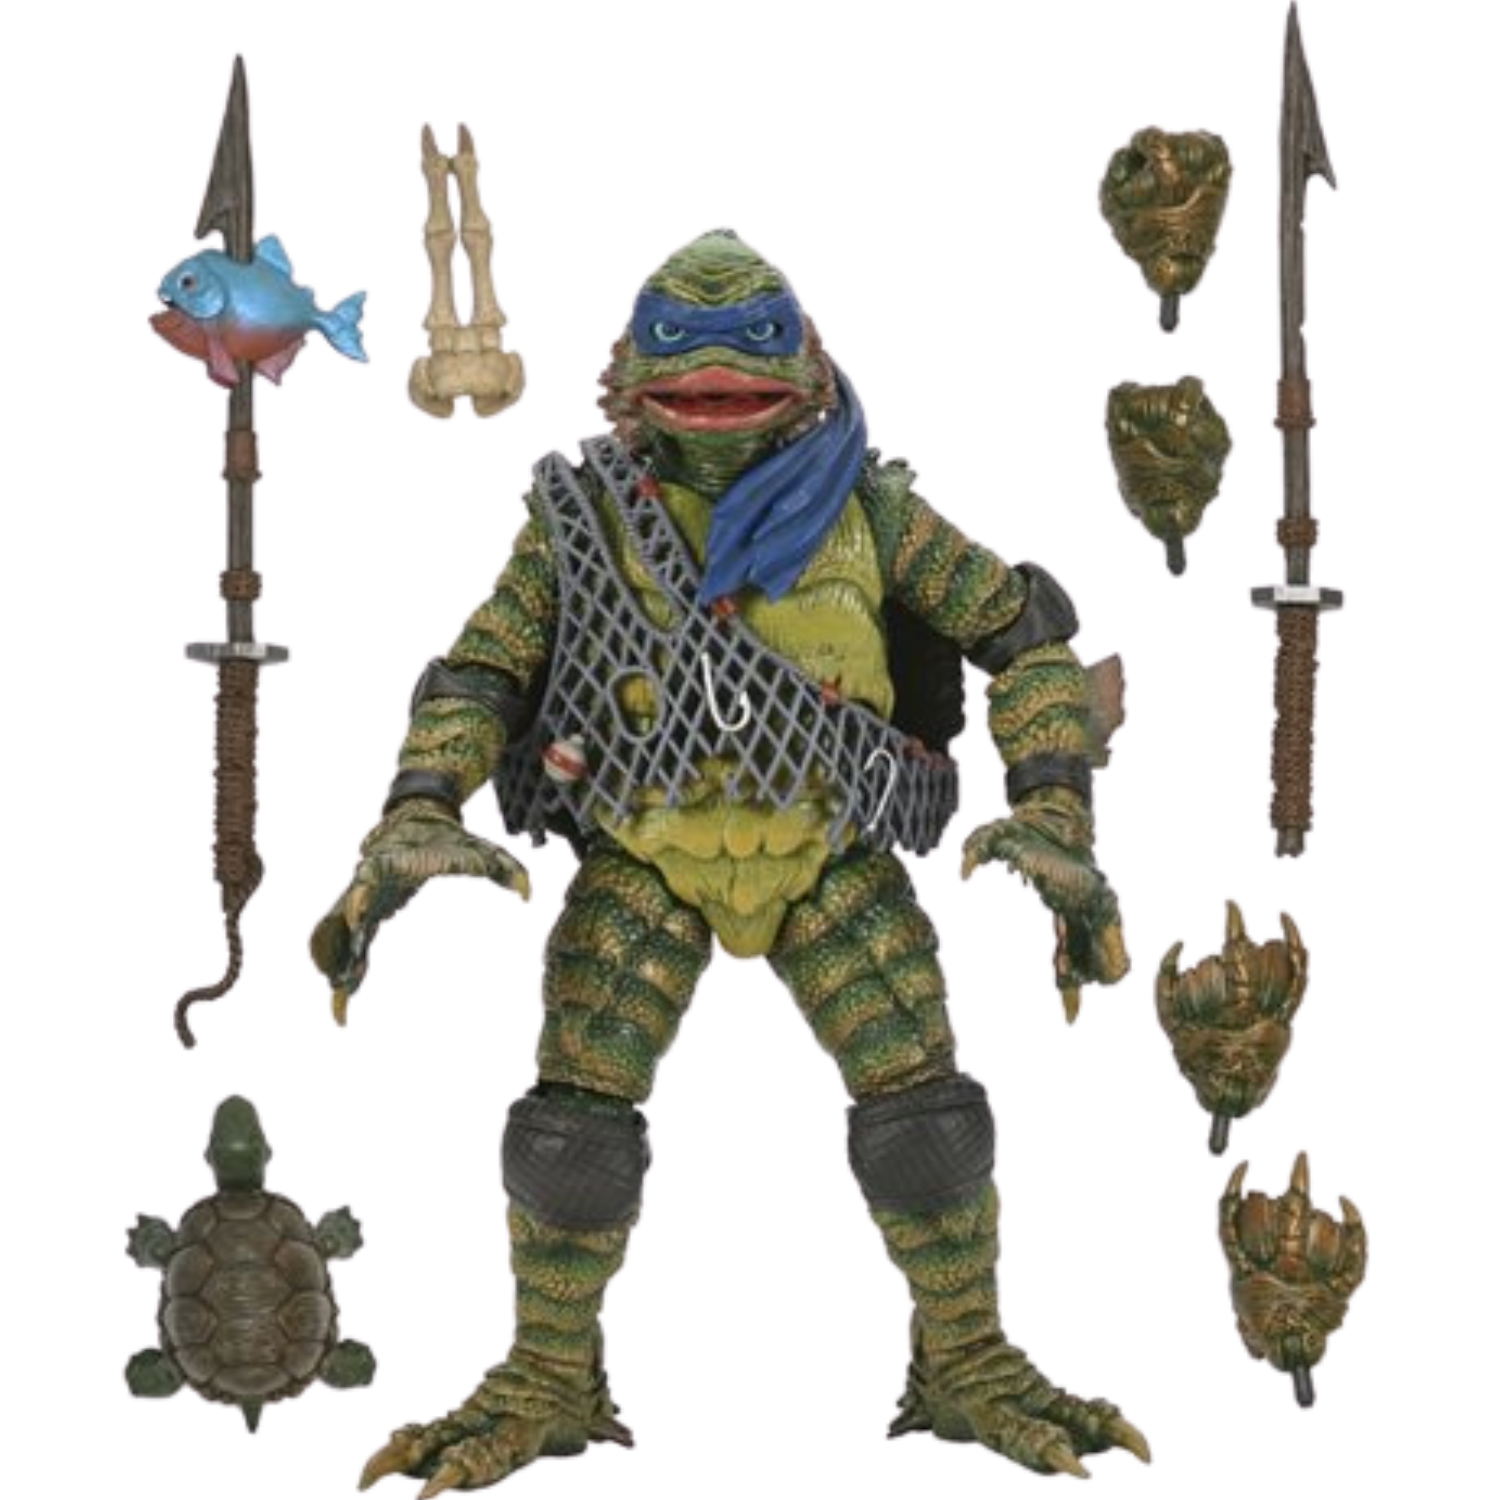 This image shows Leonardo from Teenage Mutant Ninja Turtles as the Creature from the Black Lagoon